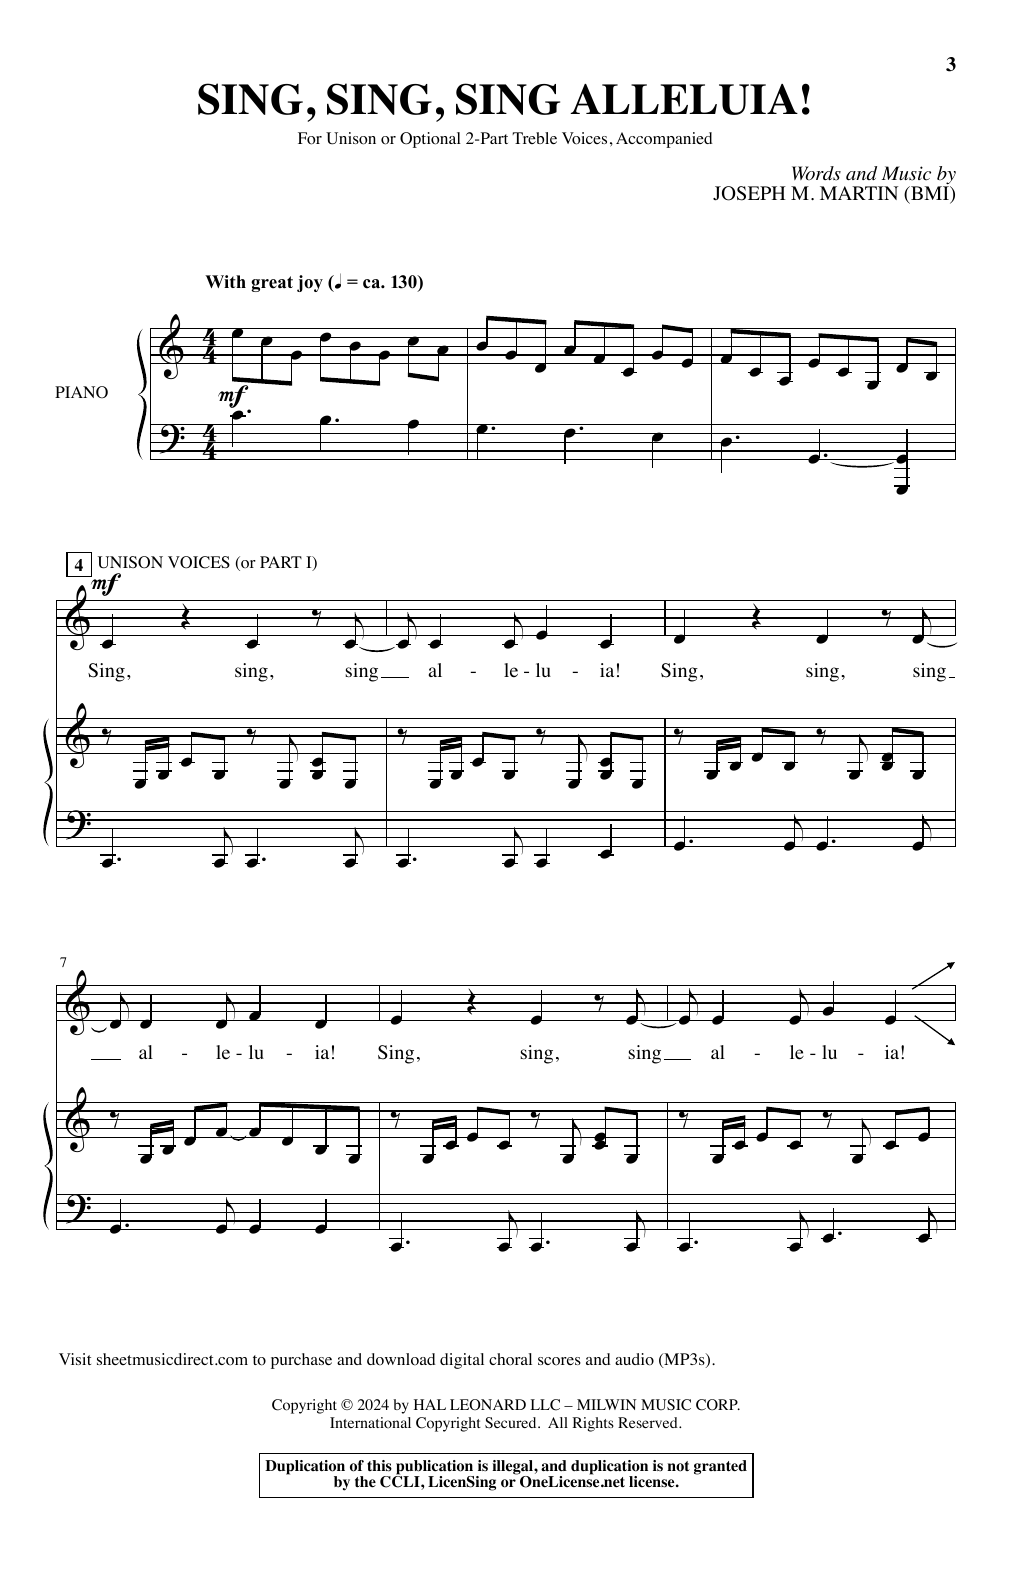 Joseph M. Martin Sing, Sing, Sing Alleluia! sheet music notes and chords arranged for Choir